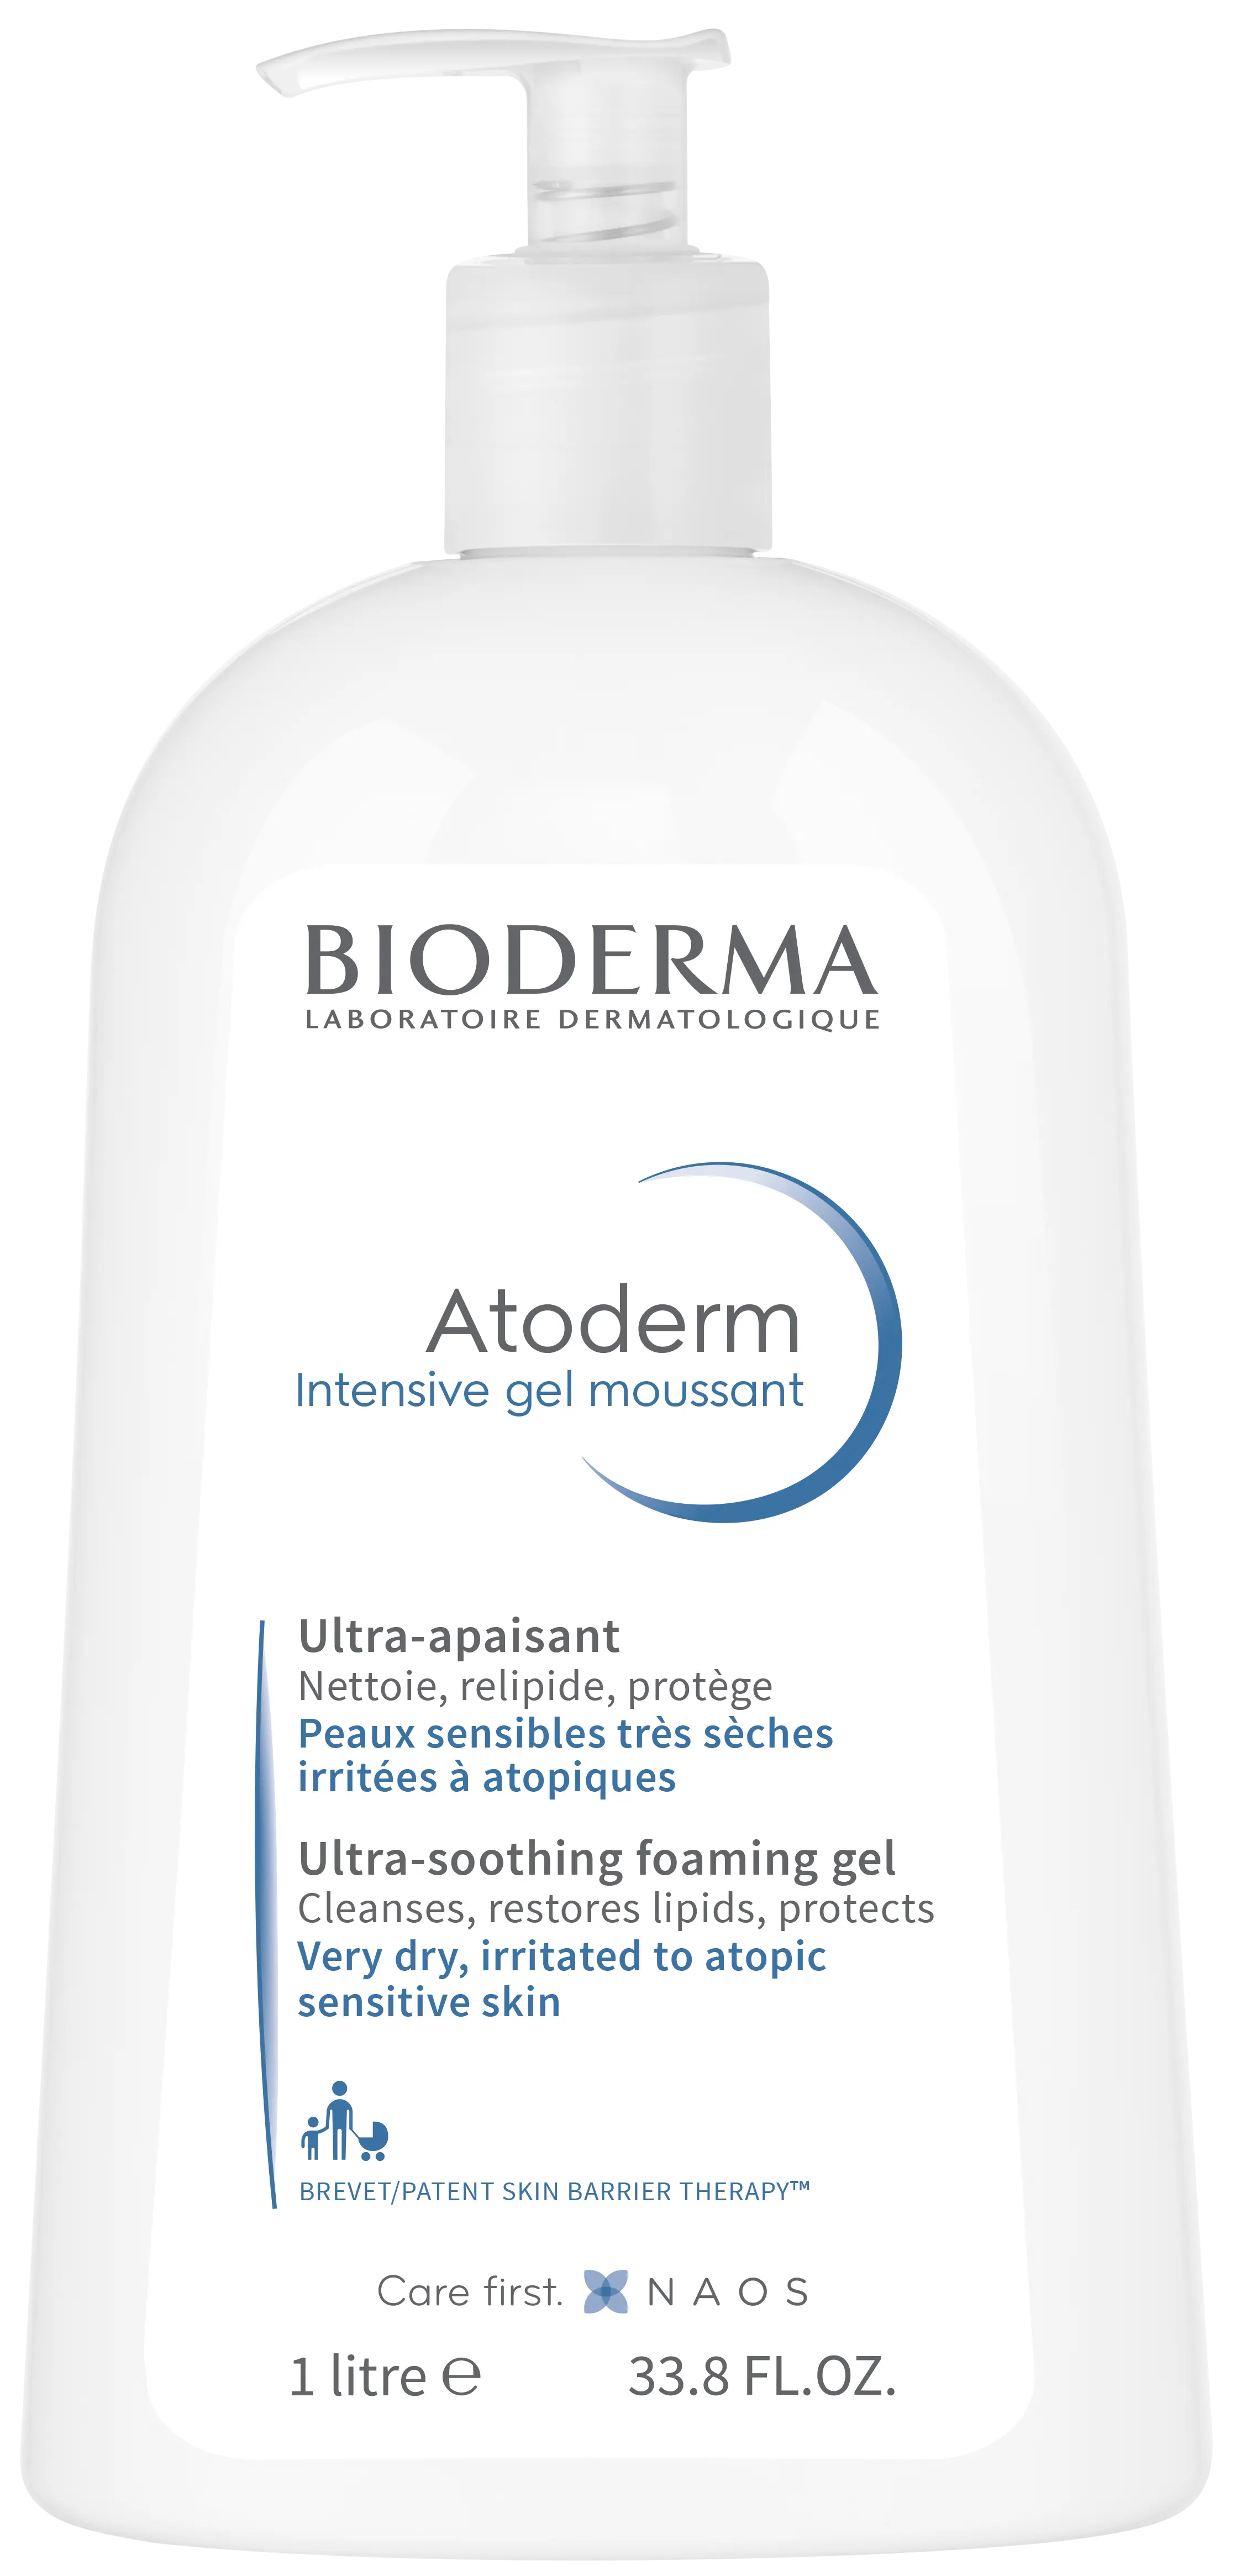 Bioderma Atoderm Intensive Gel moussant 1000 ml